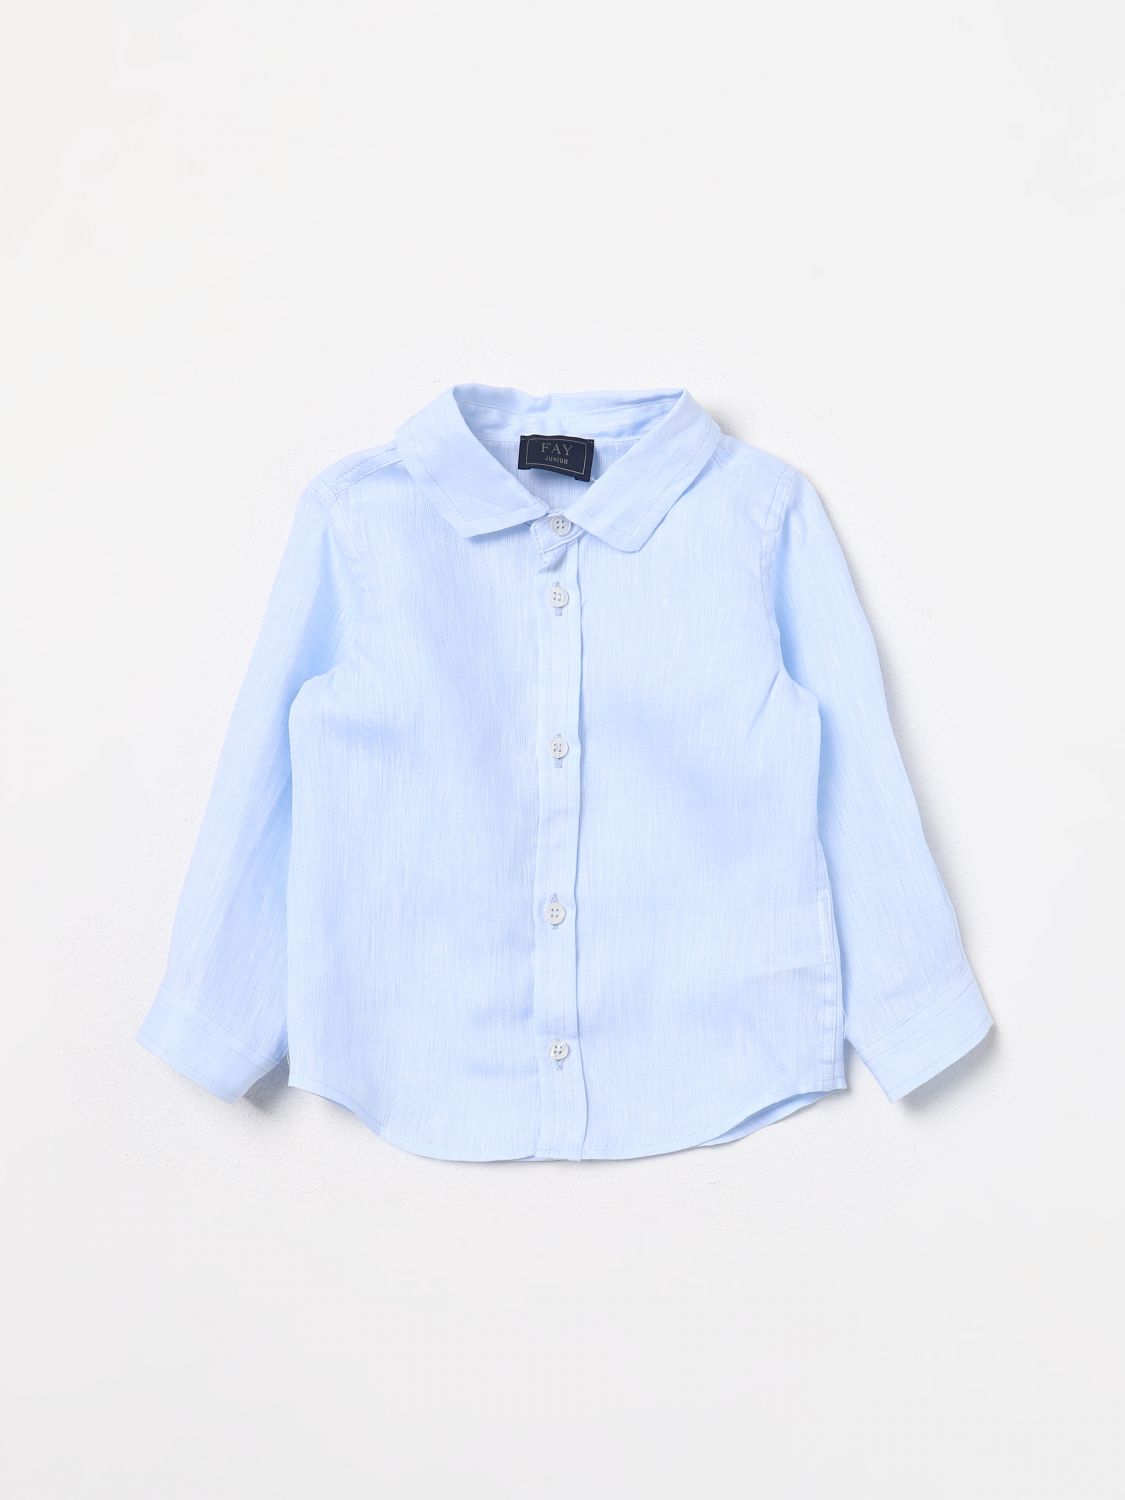 Fay Junior Babies' Shirt  Kids Colour Gnawed Blue